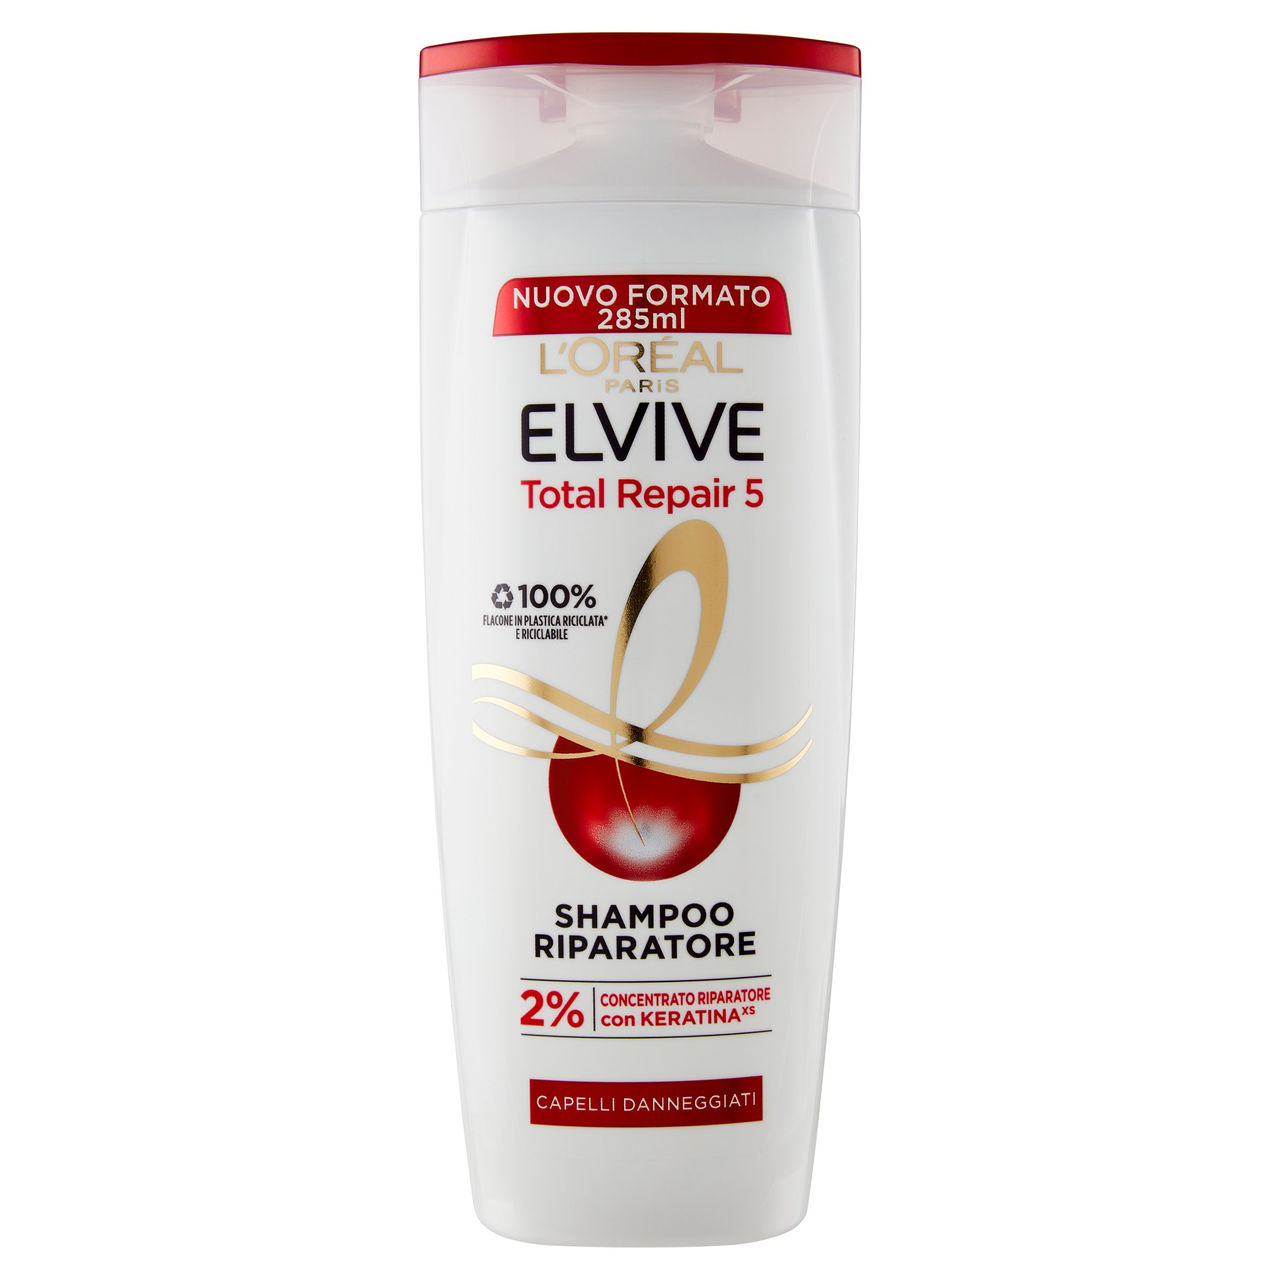 Shampoo Elvive Total Repair 5 in vendita online